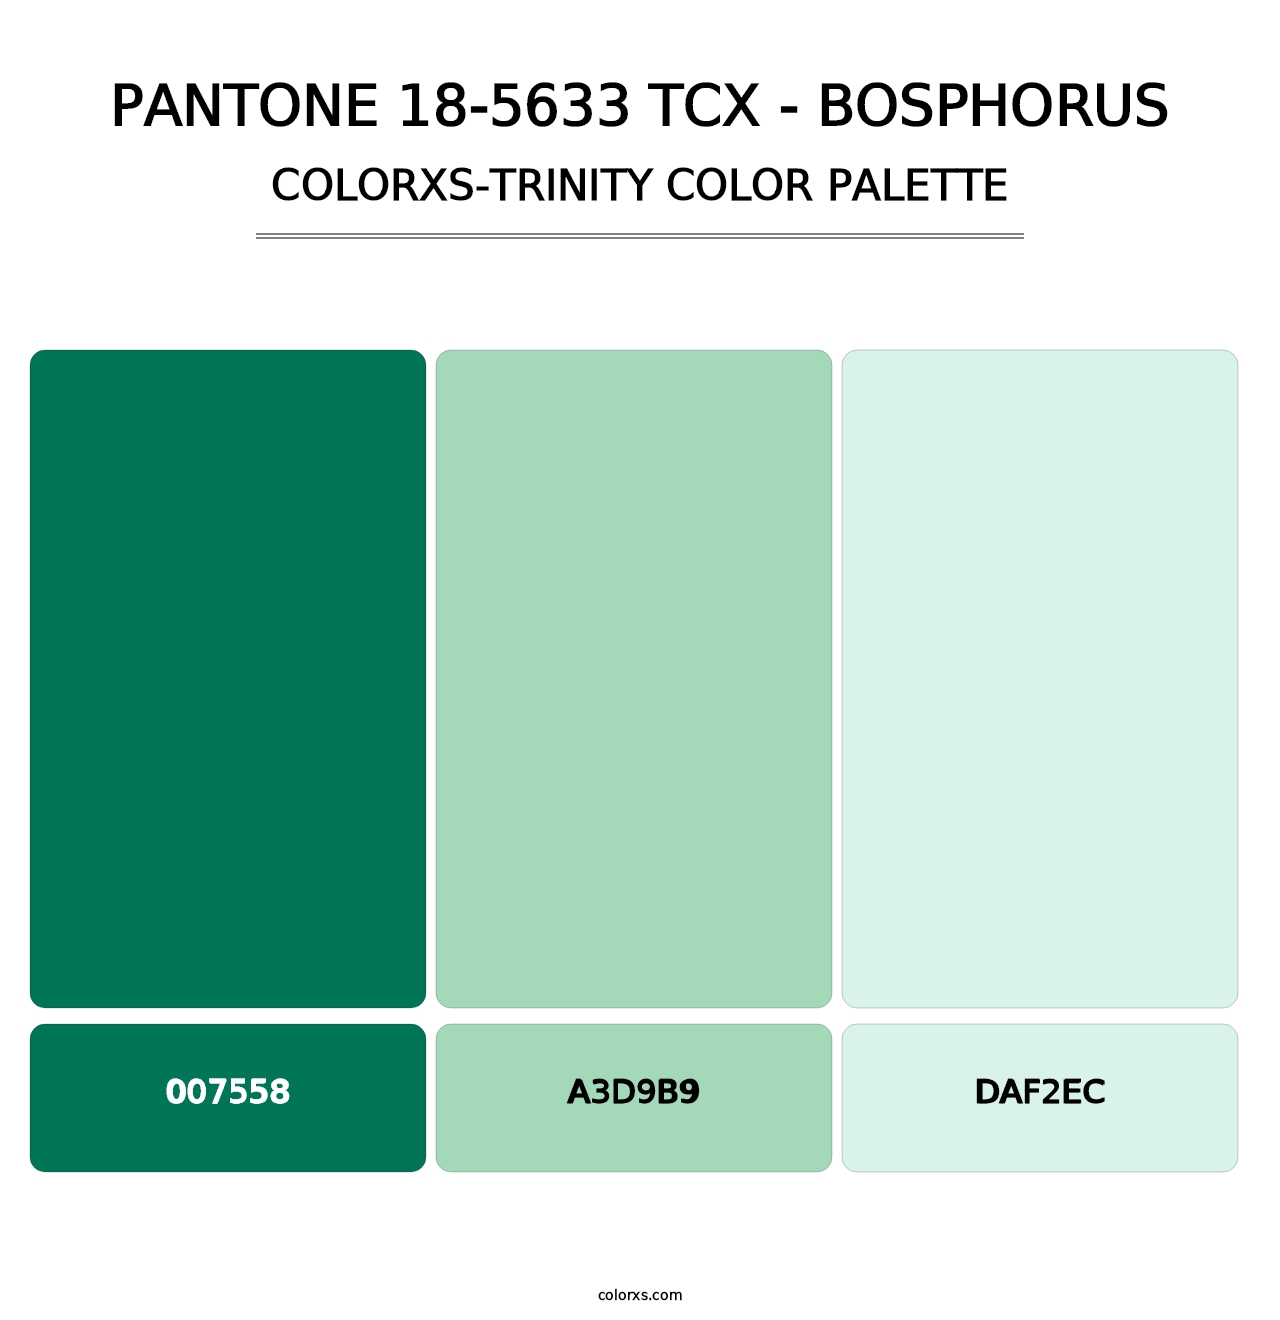 PANTONE 18-5633 TCX - Bosphorus - Colorxs Trinity Palette